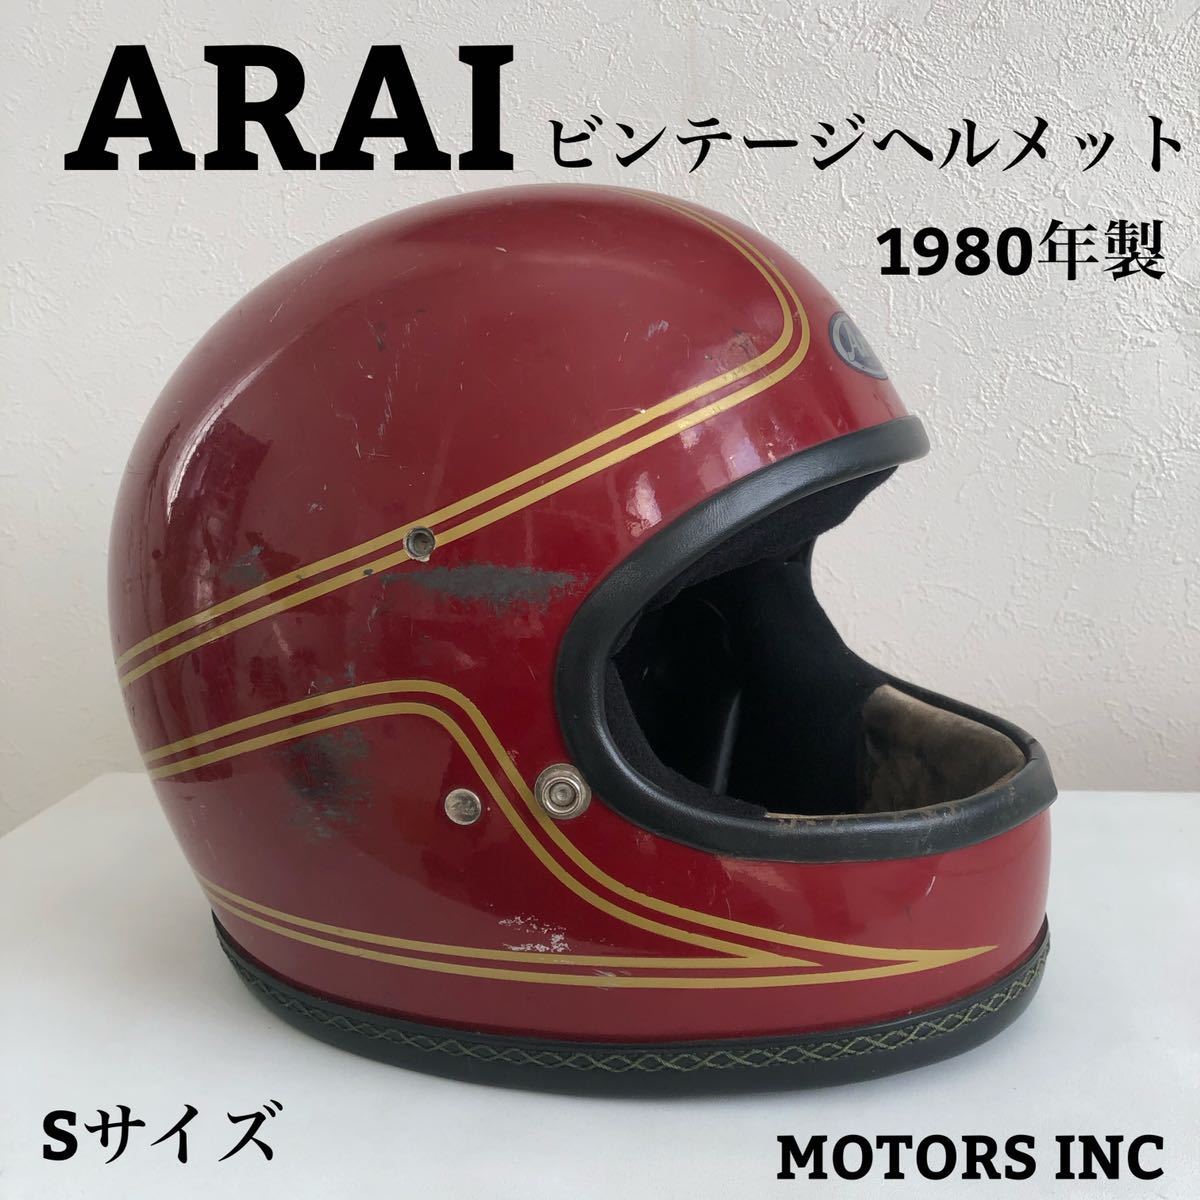 Yahoo!オークション - ARAI☆ビンテージヘルメットSサイズ 1980年製 